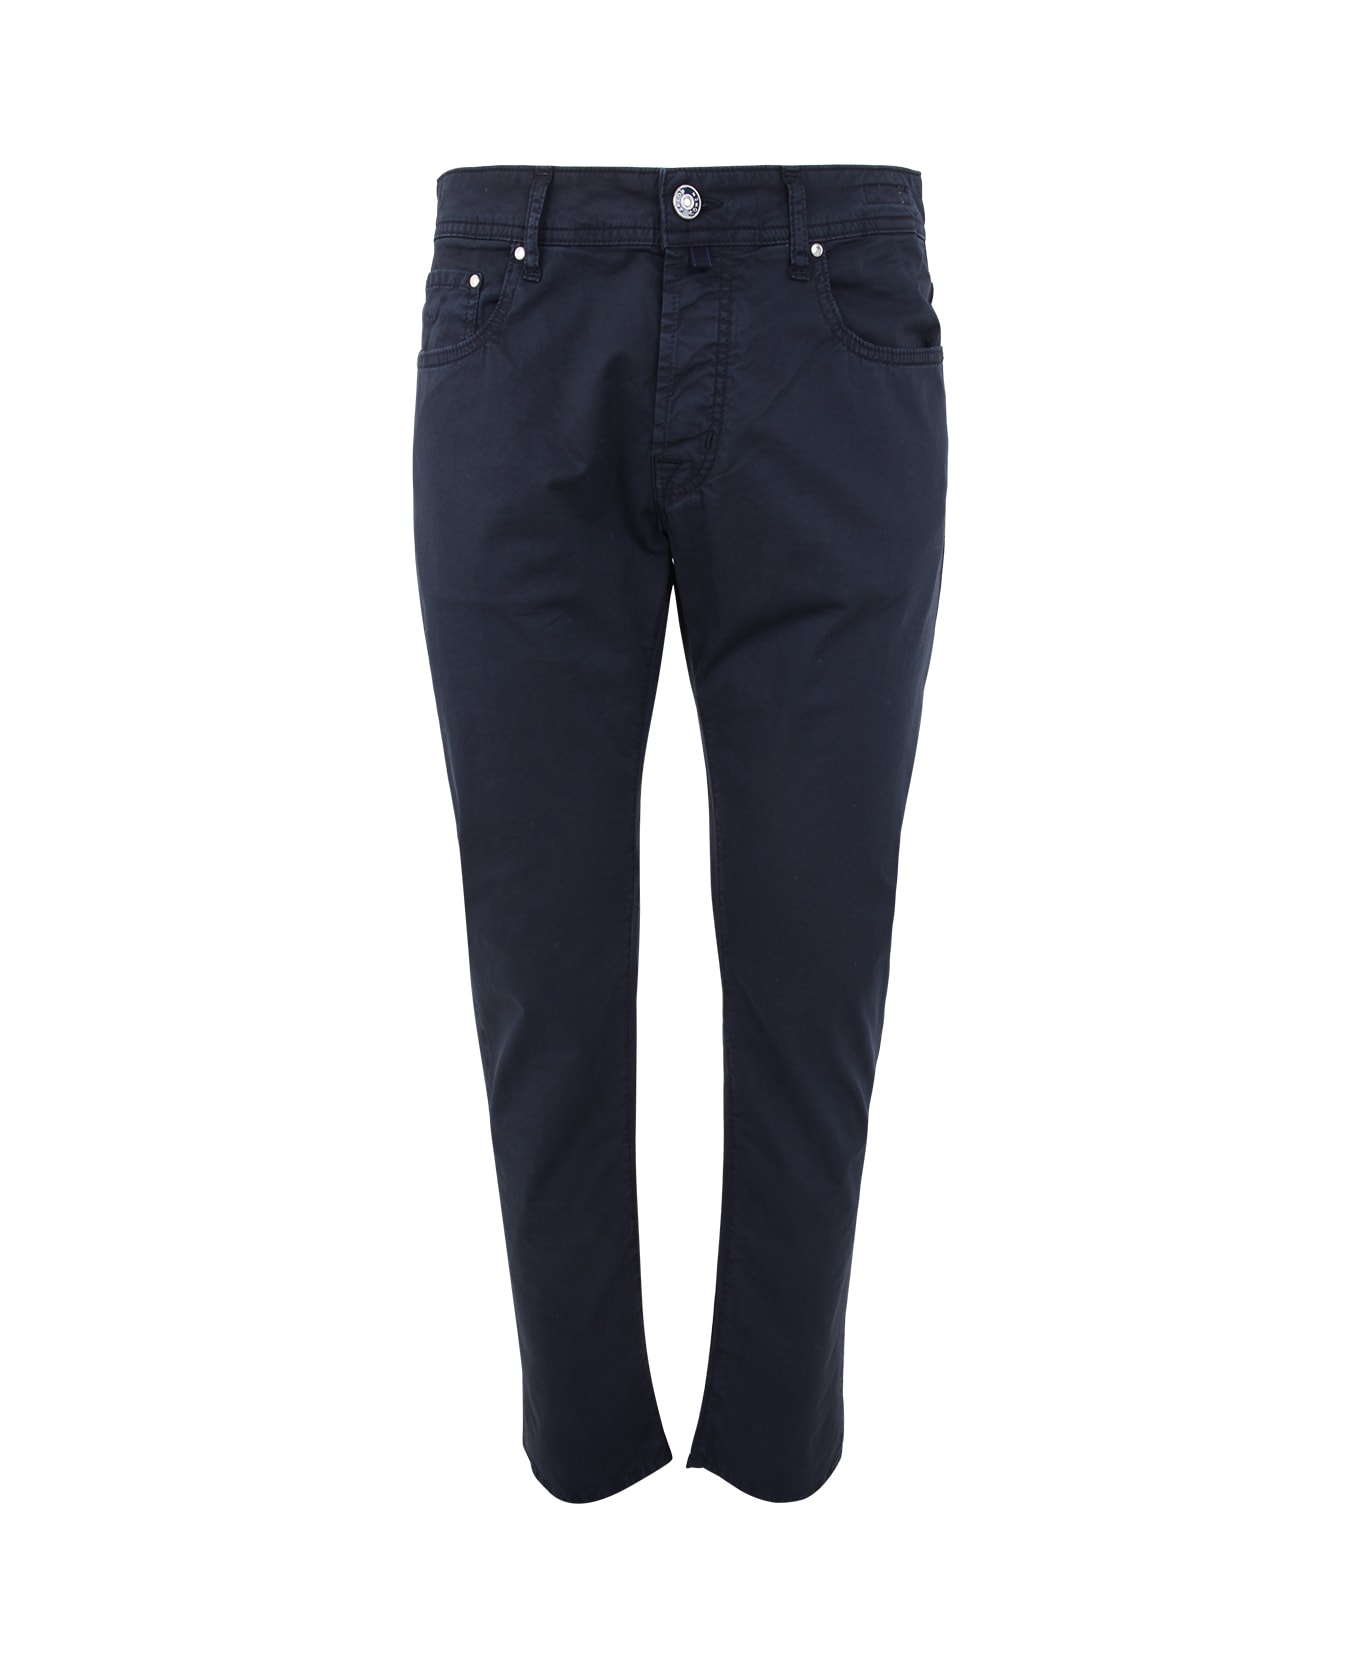 Jacob Cohen Bard Slim Fit Five Pocket Jeans - Navy Blue